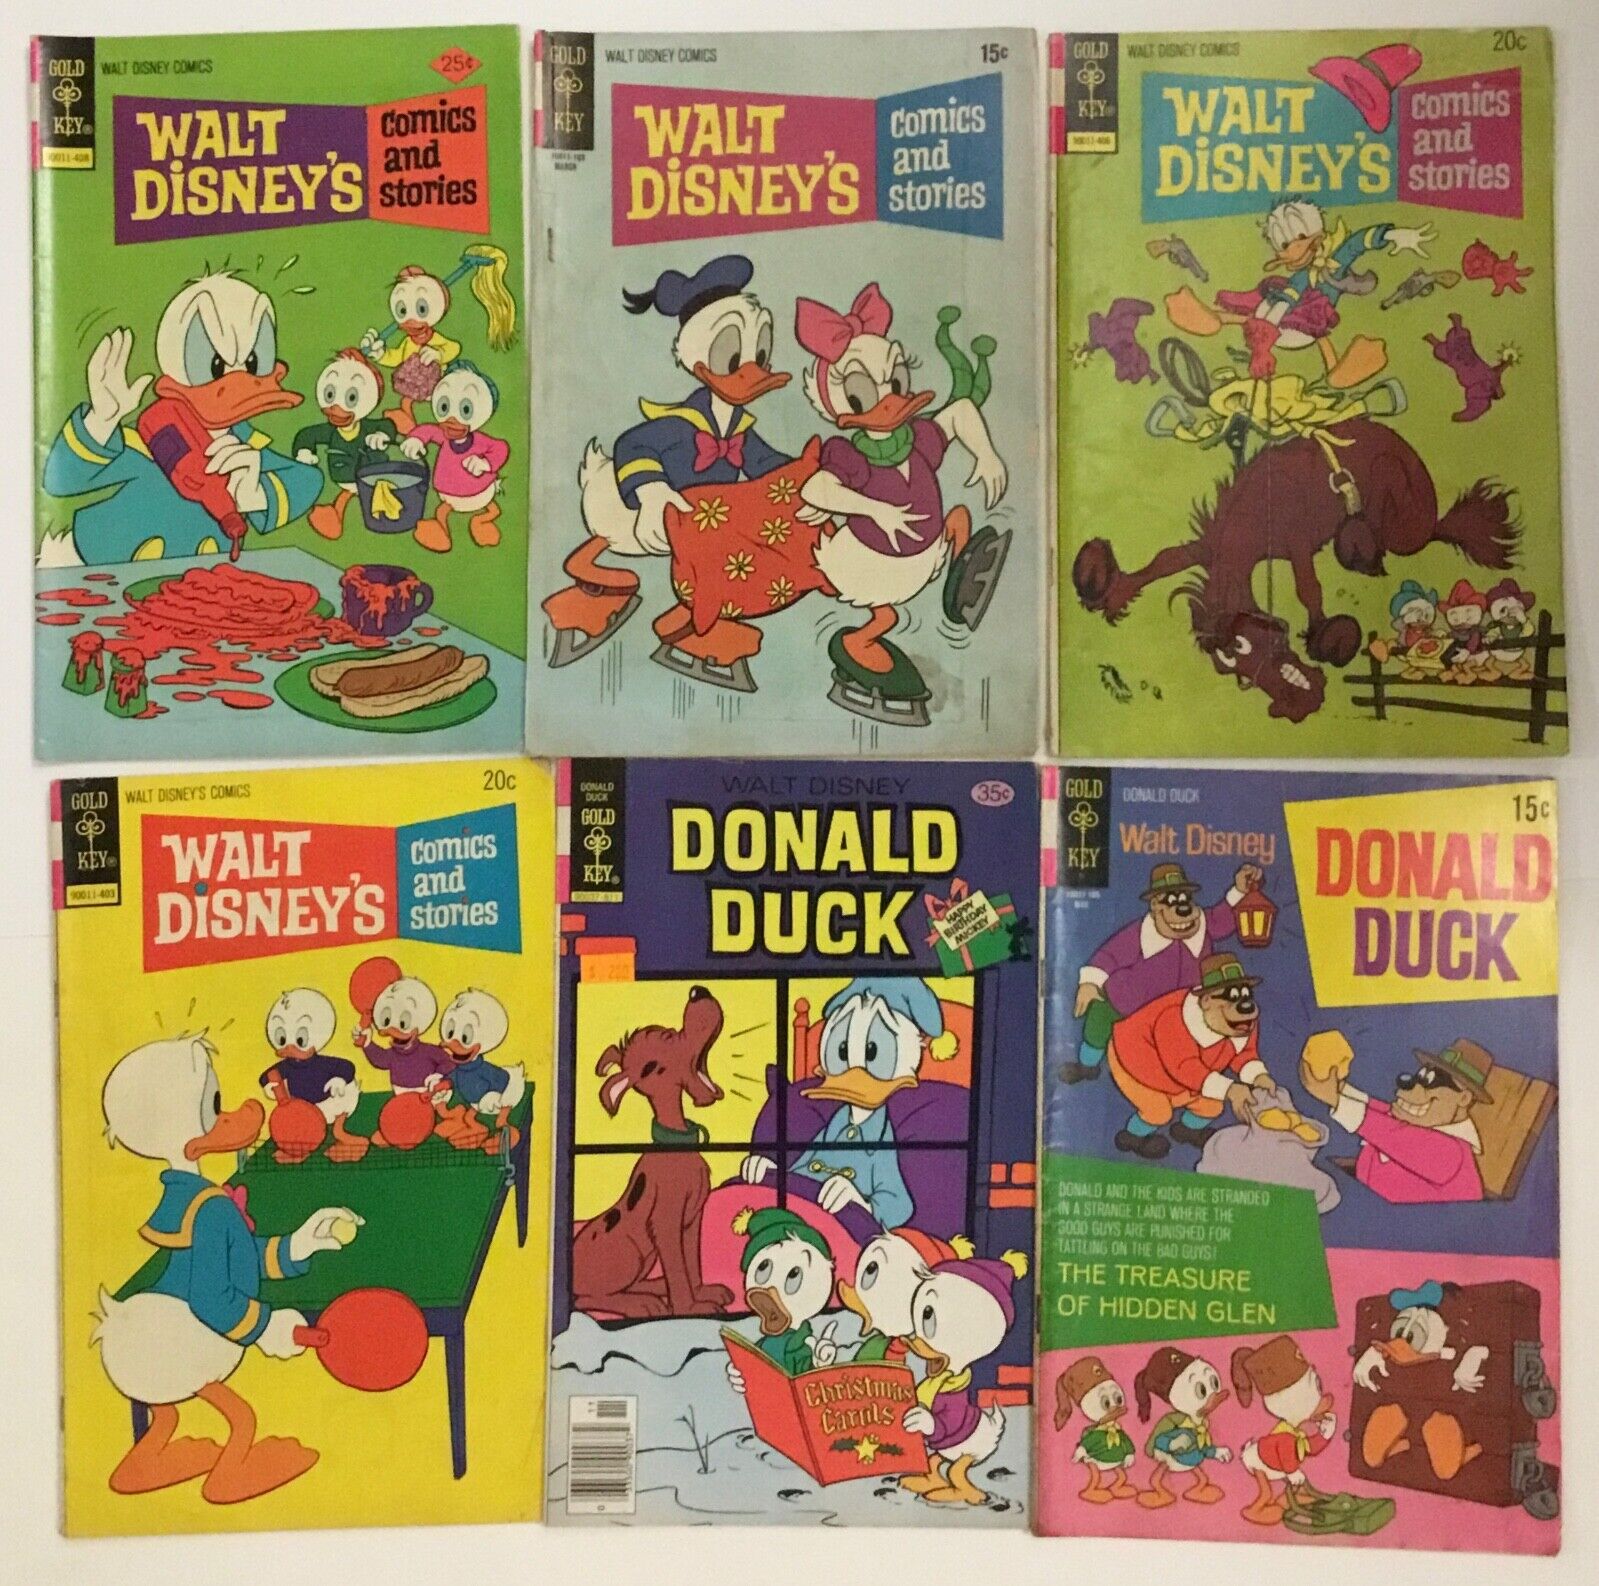 WALT DISNEY’S comics and stories DONALD DUCK Bronze Age 1971 6 Comic Book LOT vg